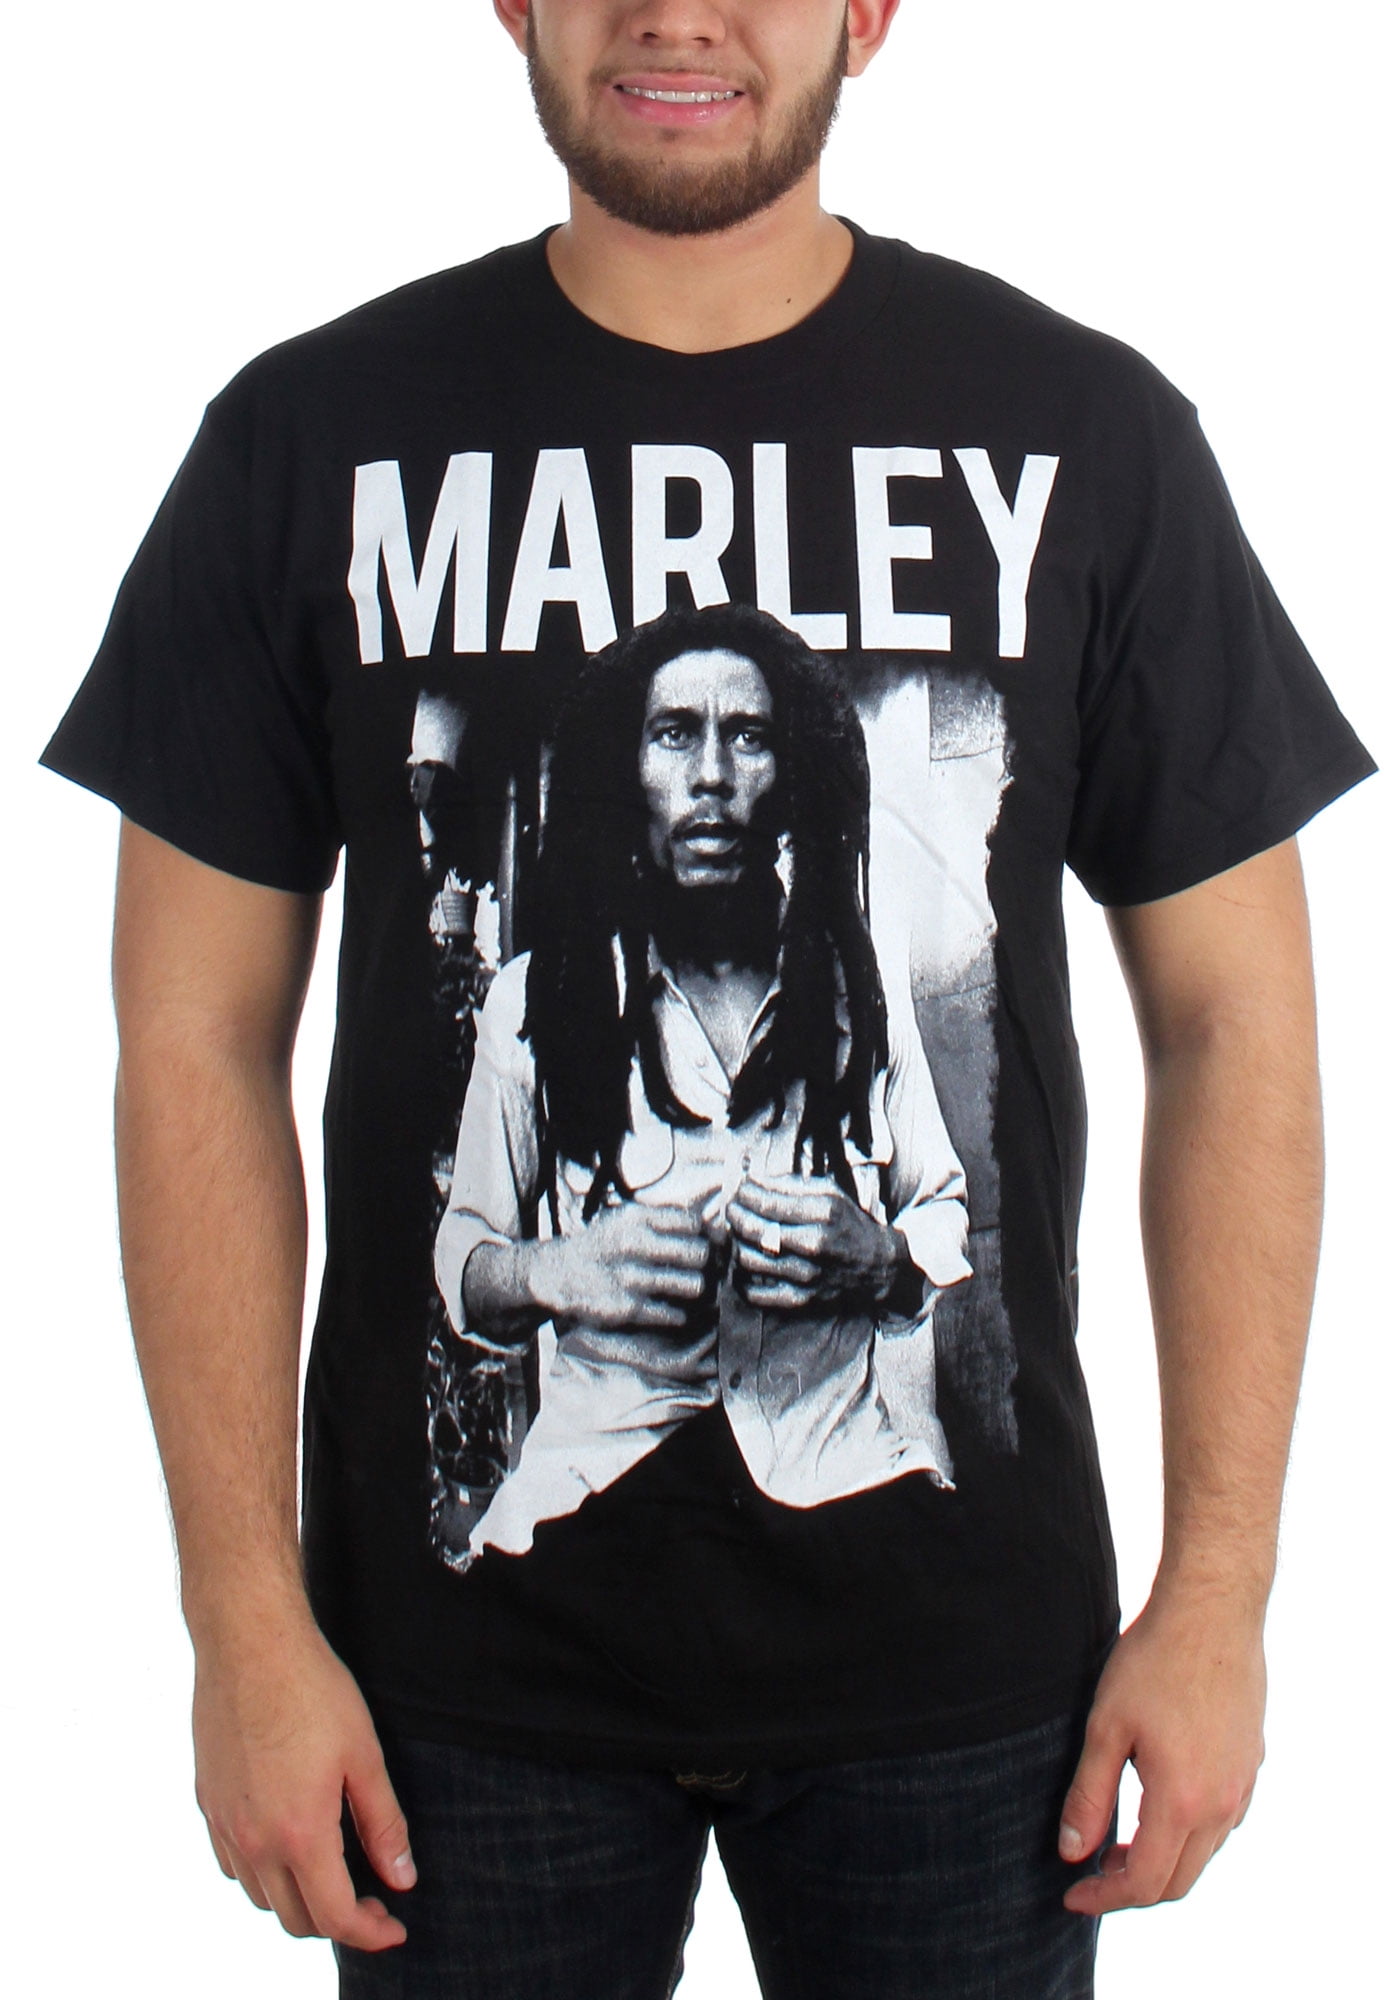 Bob Marley - Black & White Adult T-Shirt in Black - Walmart.com ...